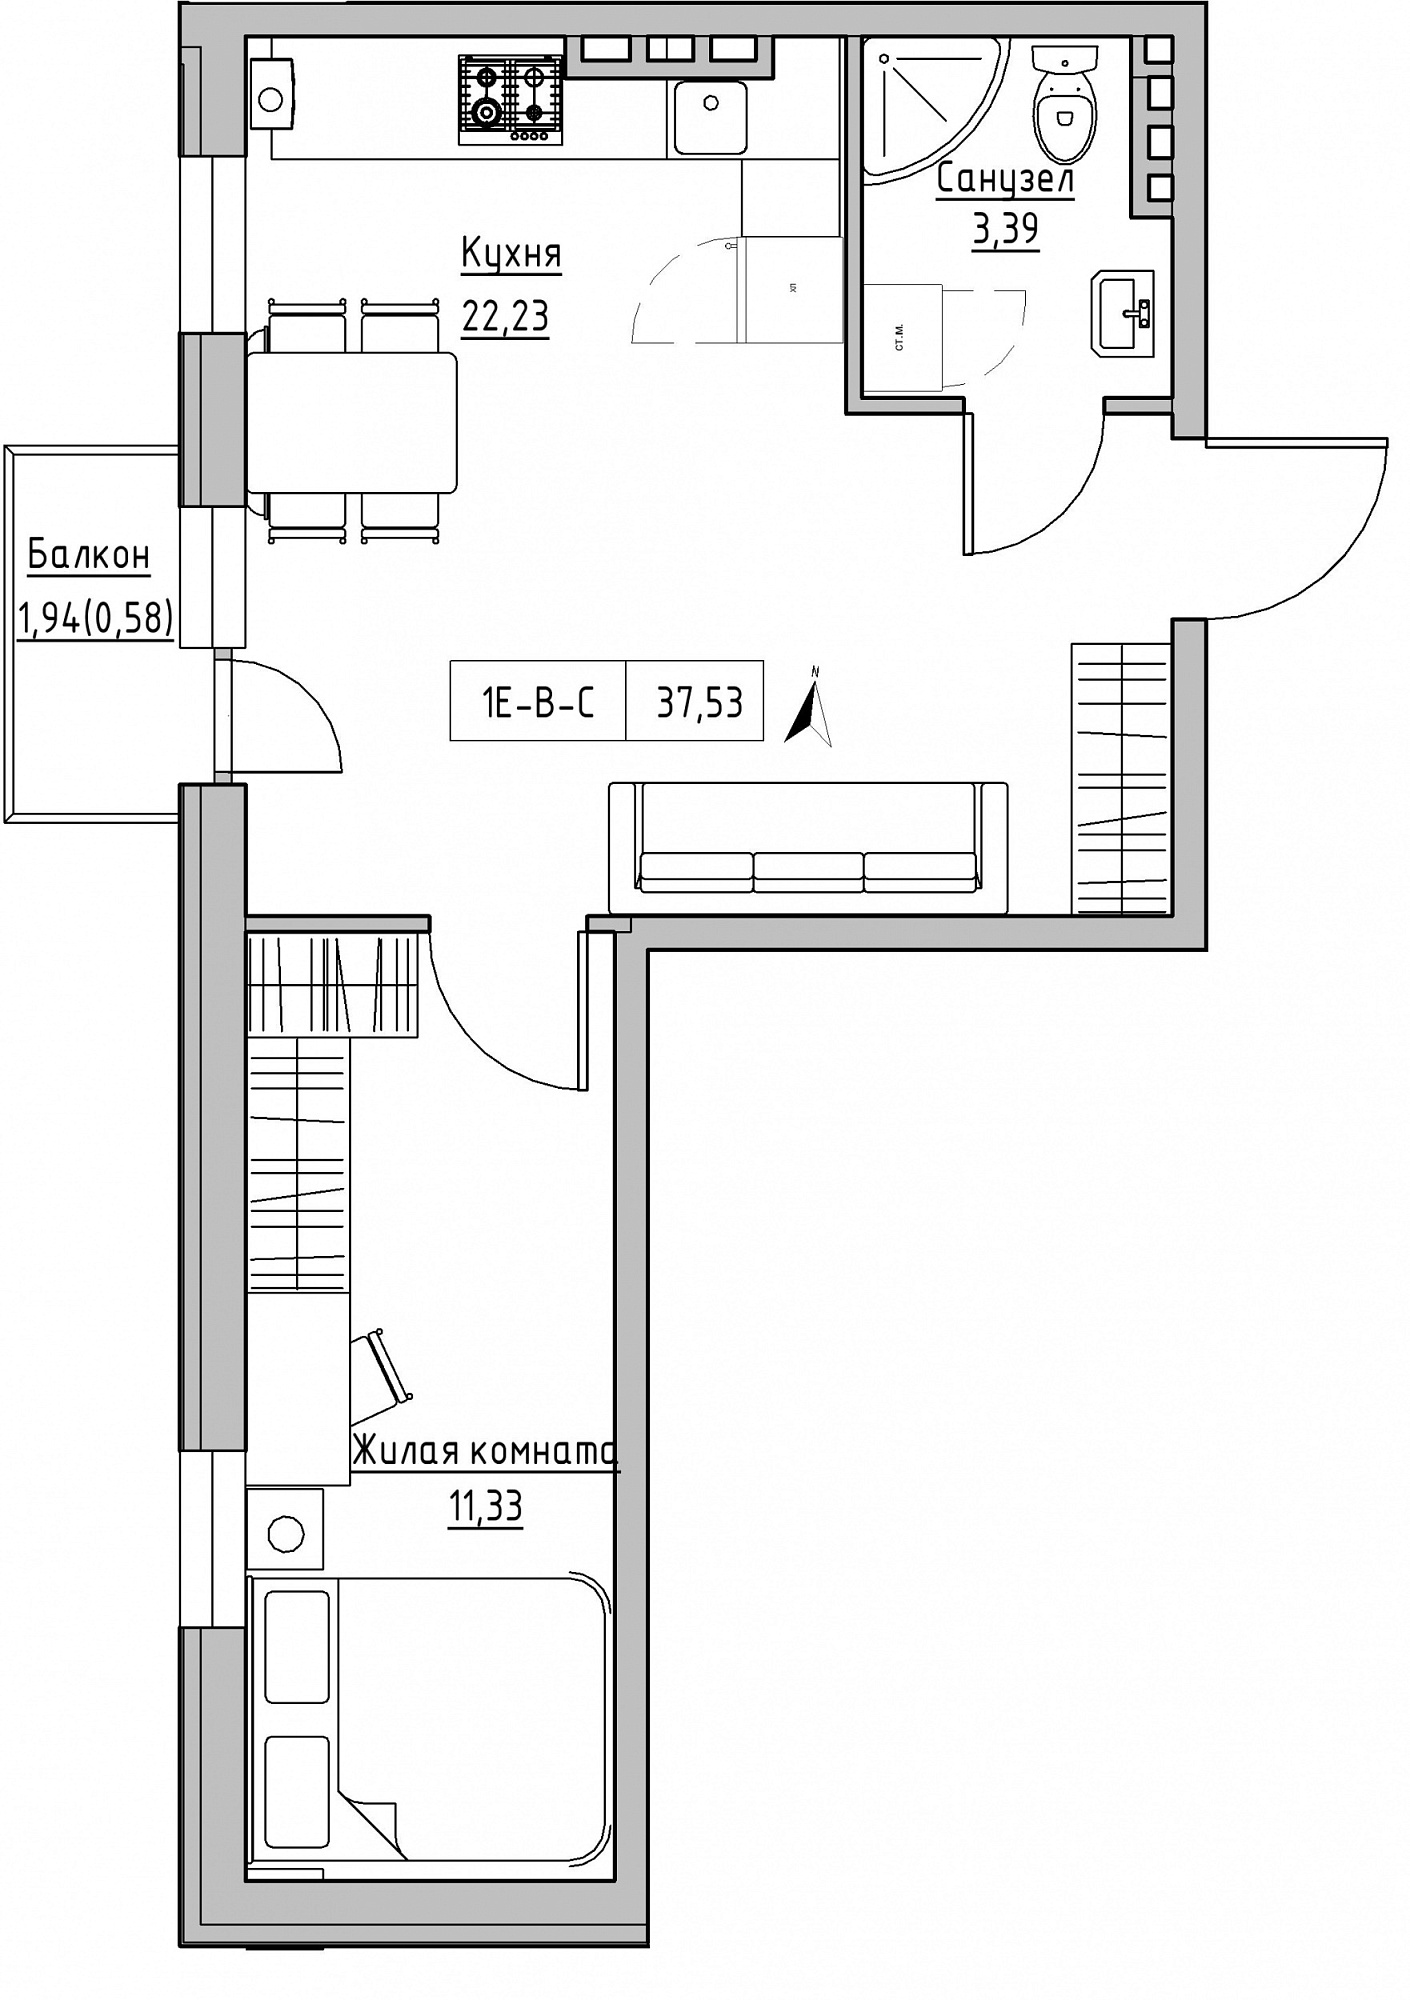 Planning 1-rm flats area 37.53m2, KS-024-03/0010.